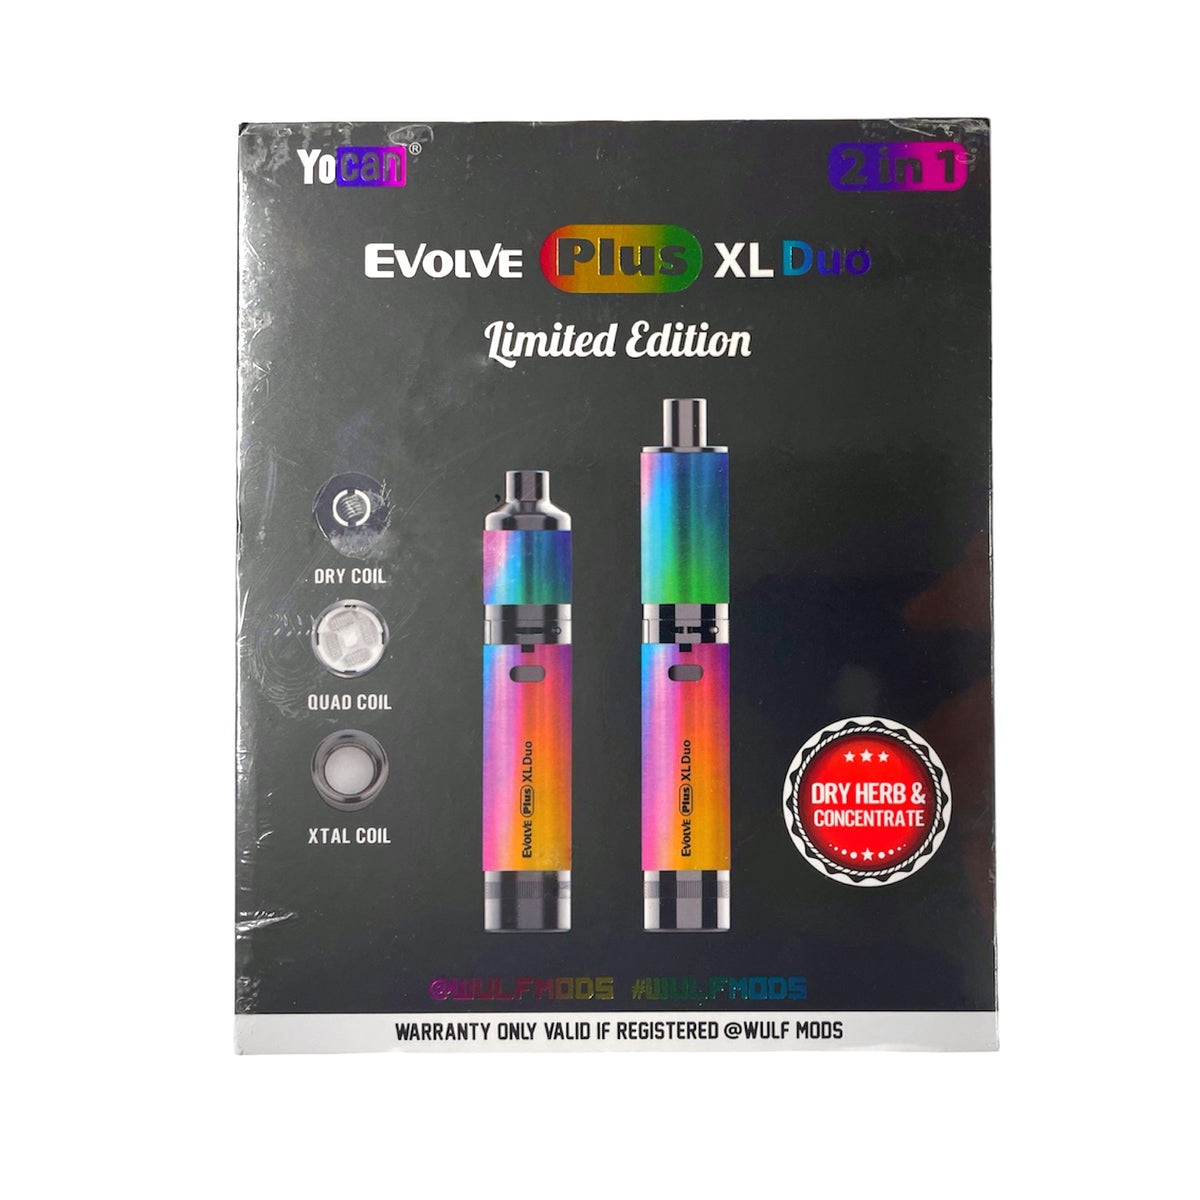 Yocan Evolve Plus XL Box